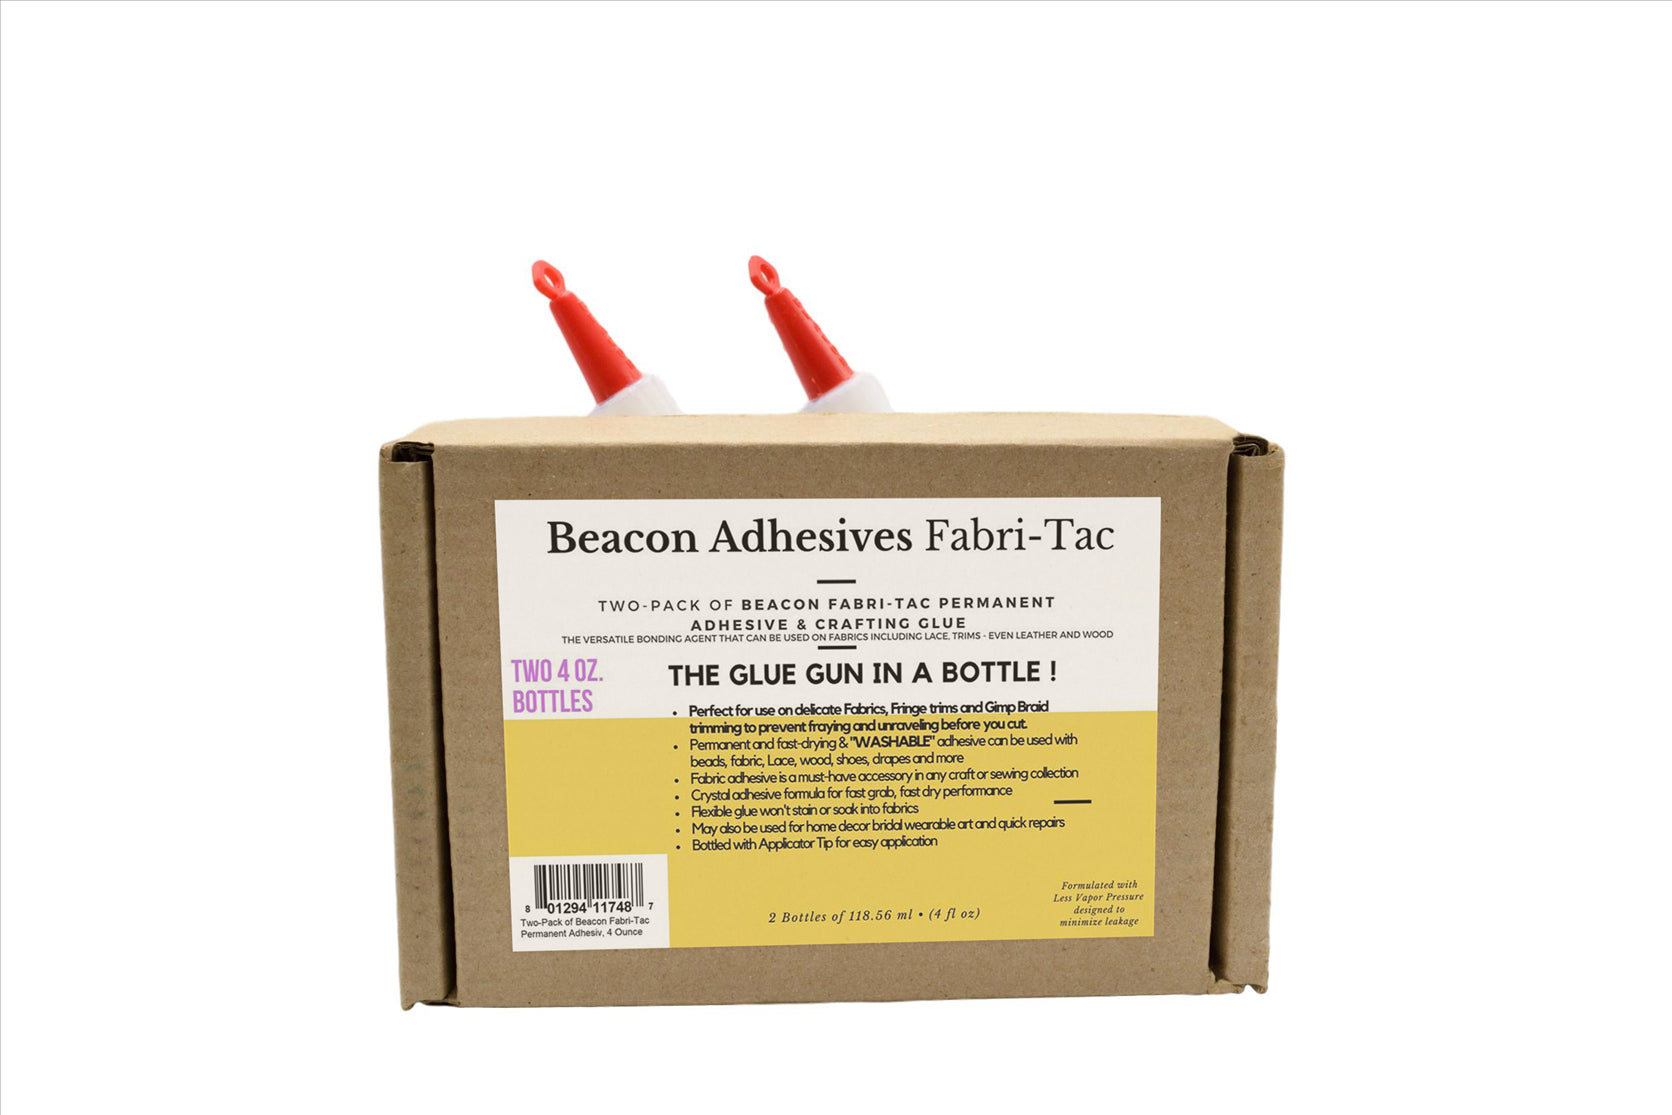 Beacon 4oz Fabric-Tac Adhesive